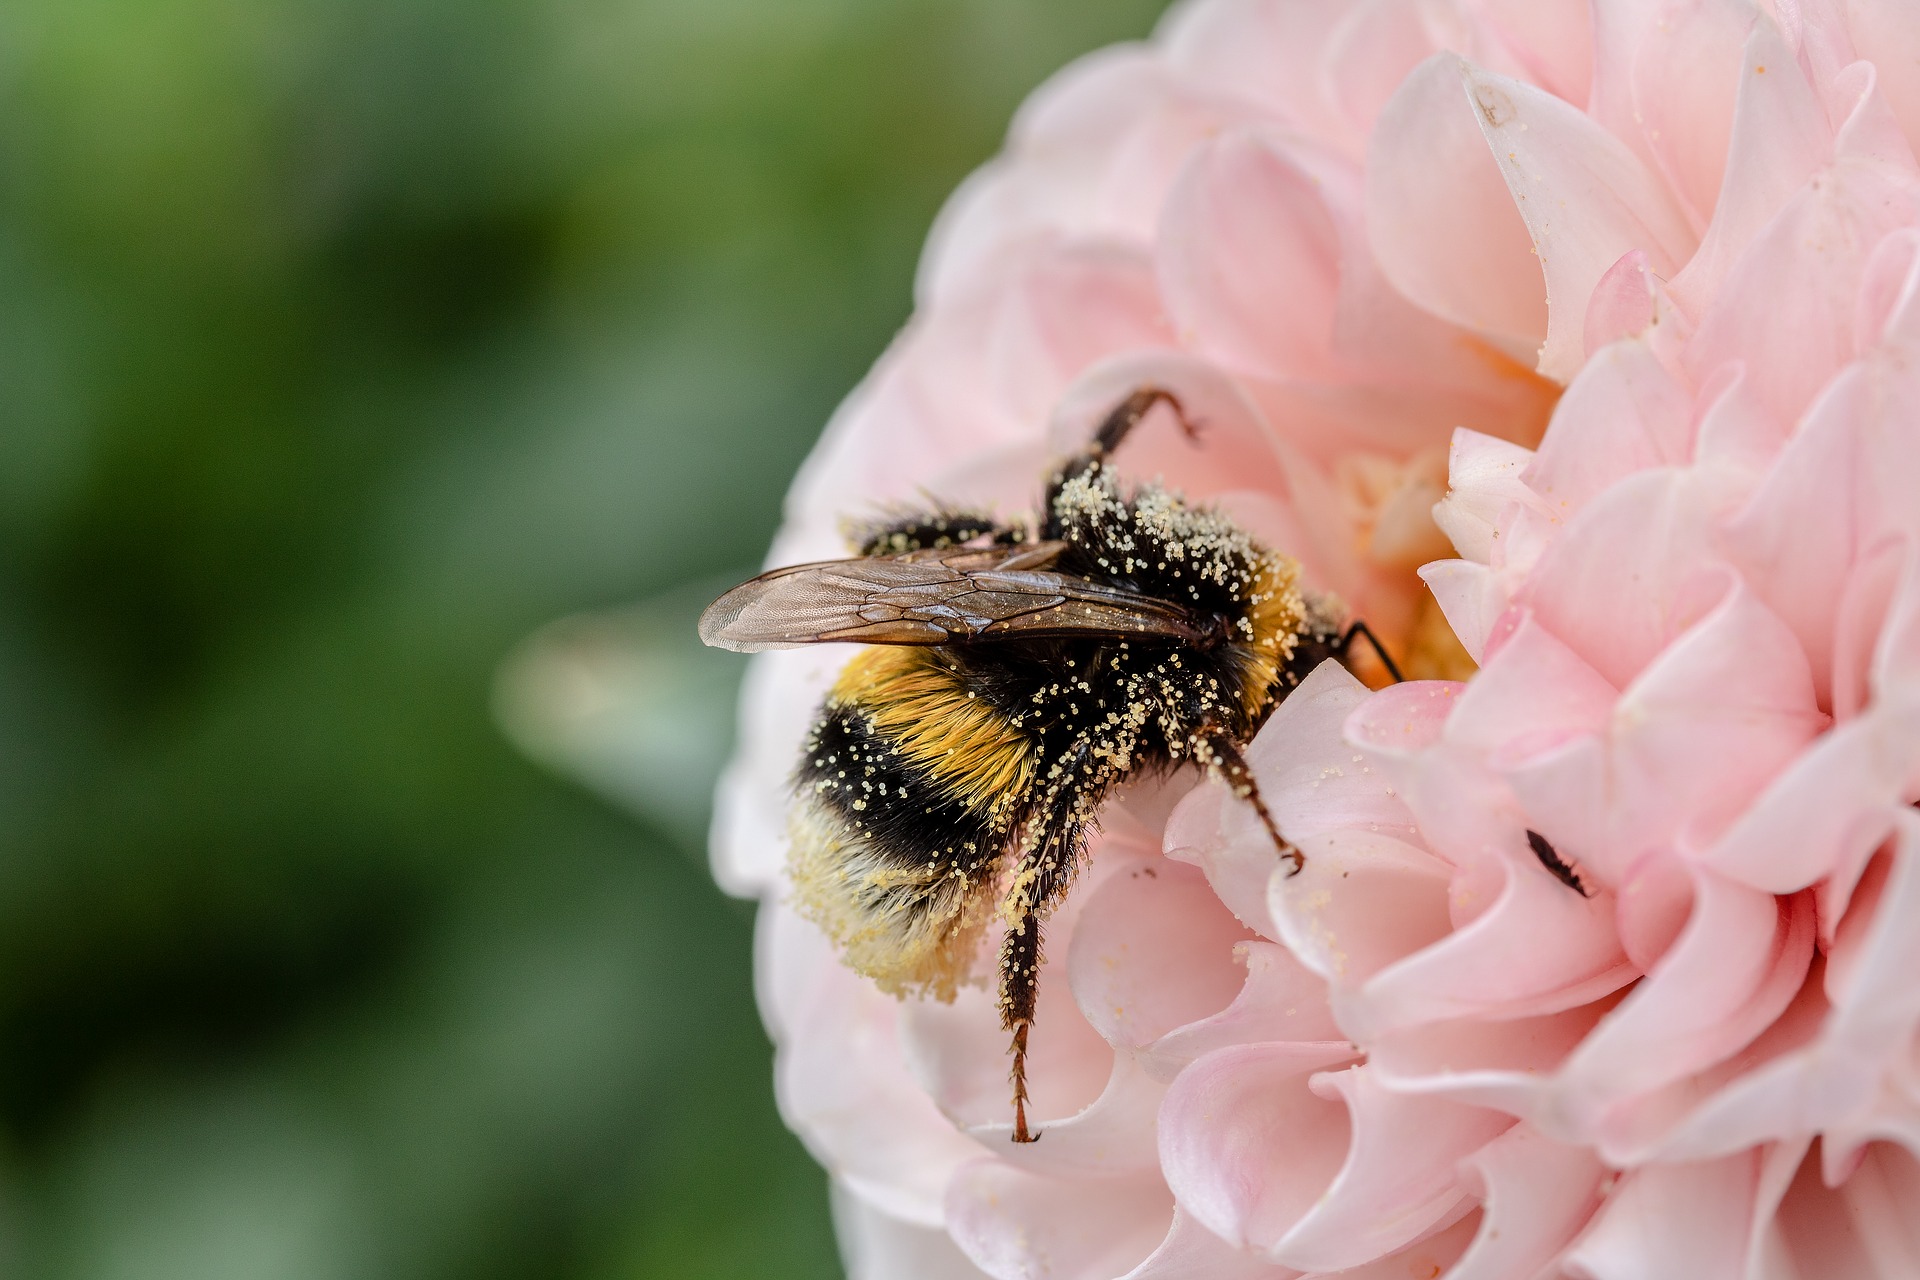 a bumblebee pollinates a flower